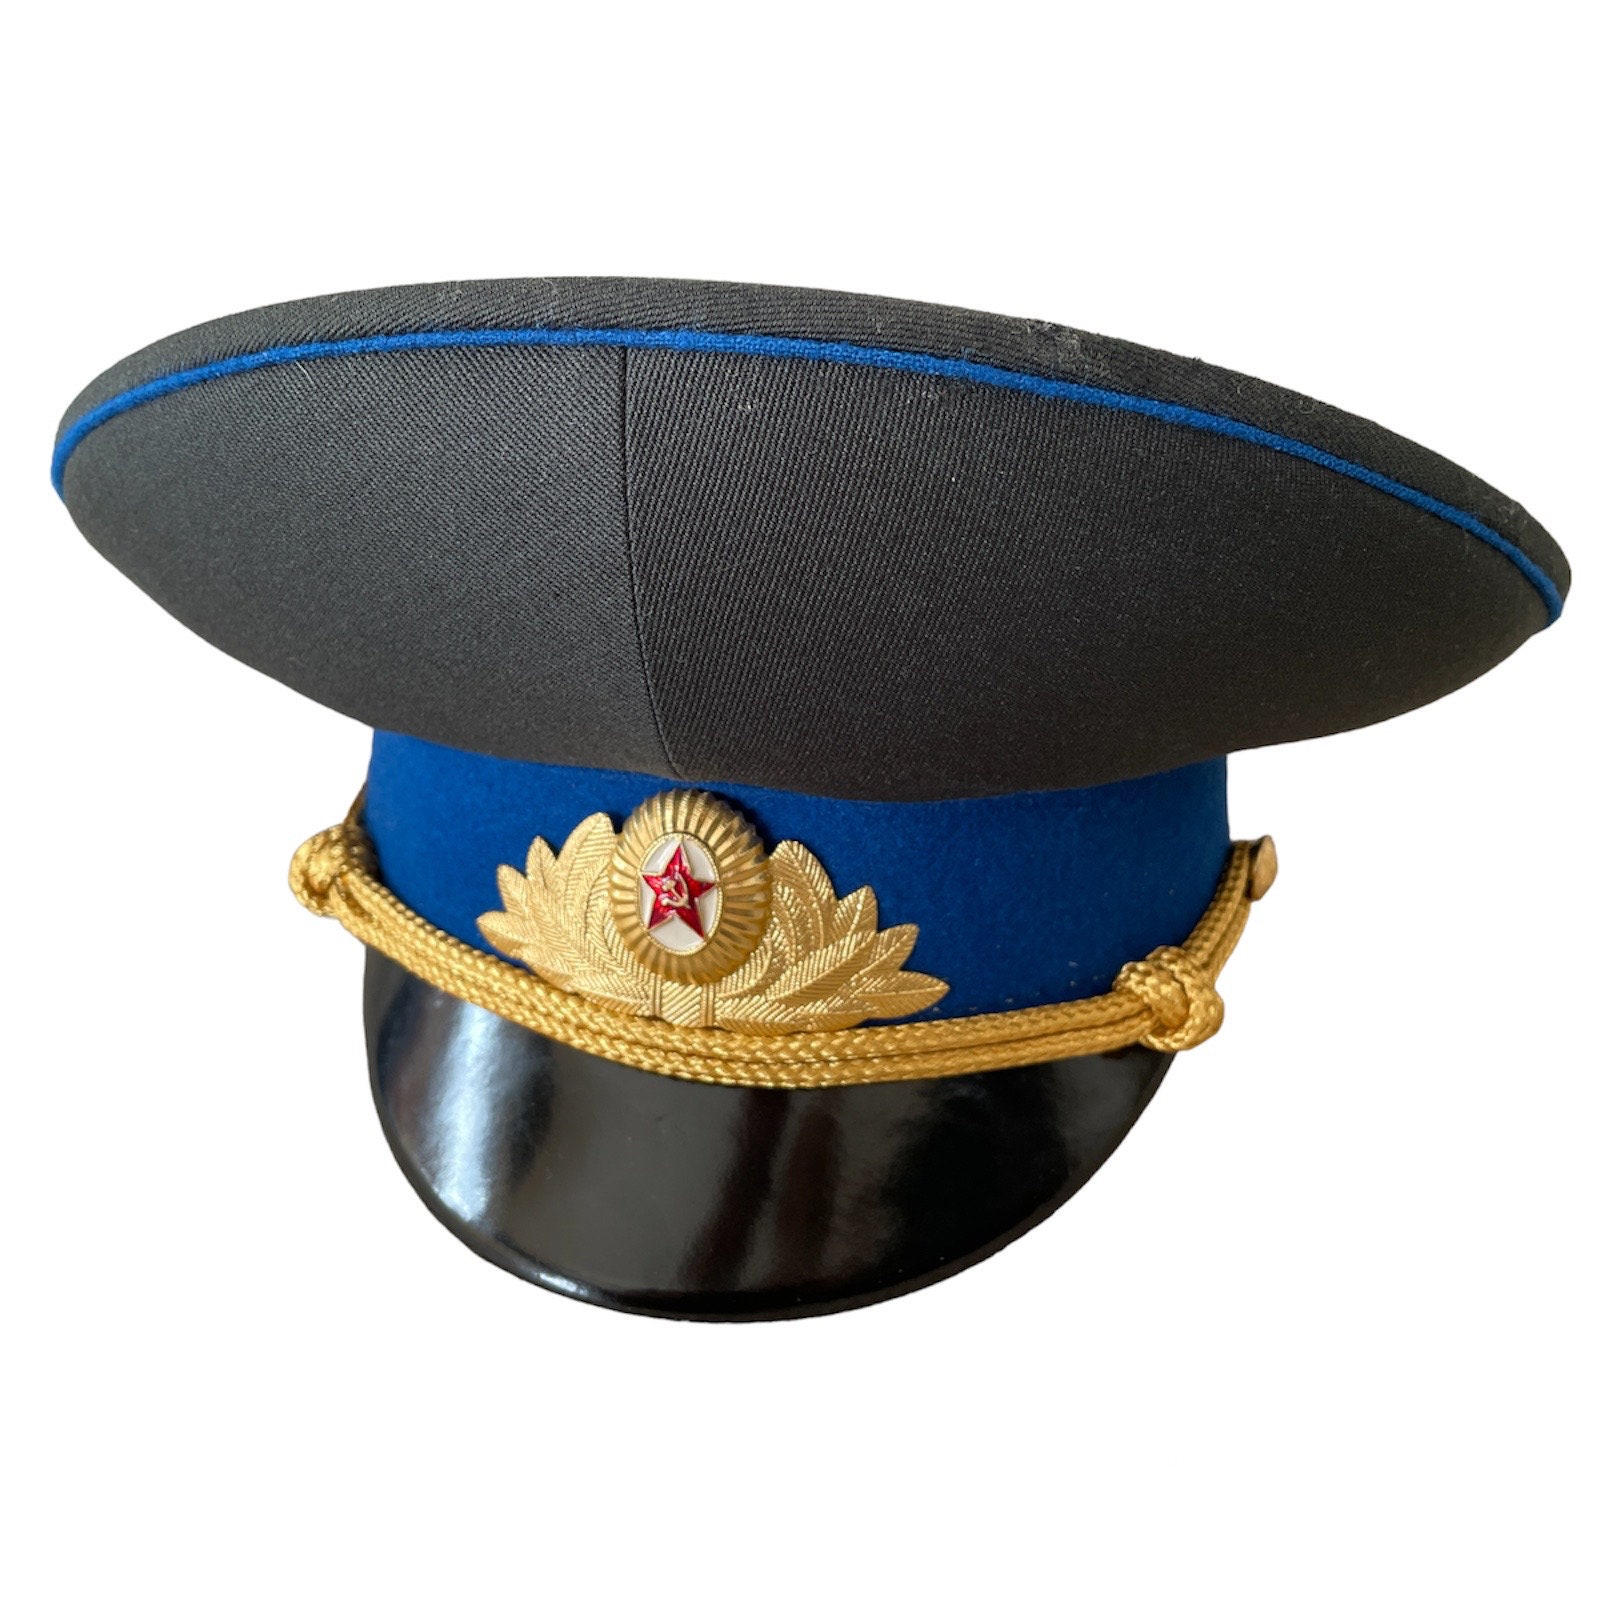 Russian Pilotka Soviet Military Hat Ww2 Uniform cccp hat Communist Cap 